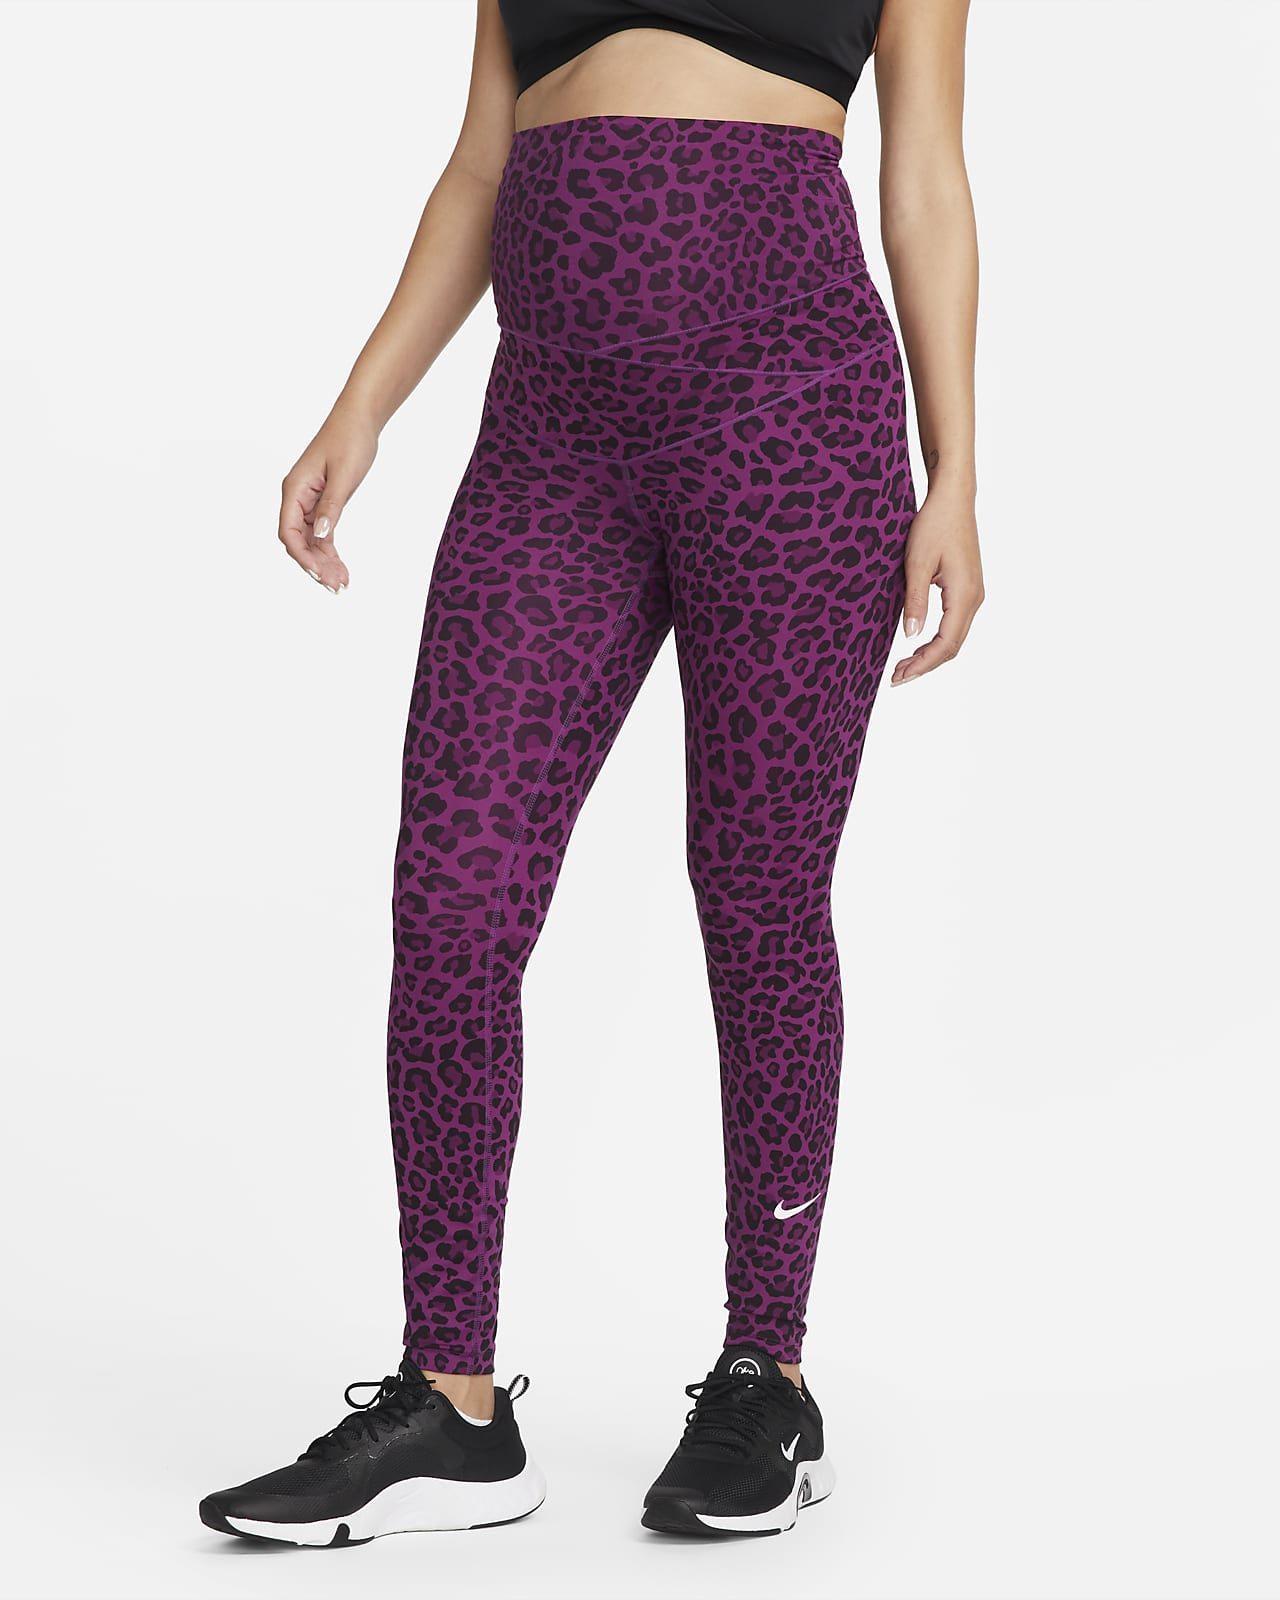 Nike One (M) Women's High-Waisted Leopard Print Leggings (Maternity ...